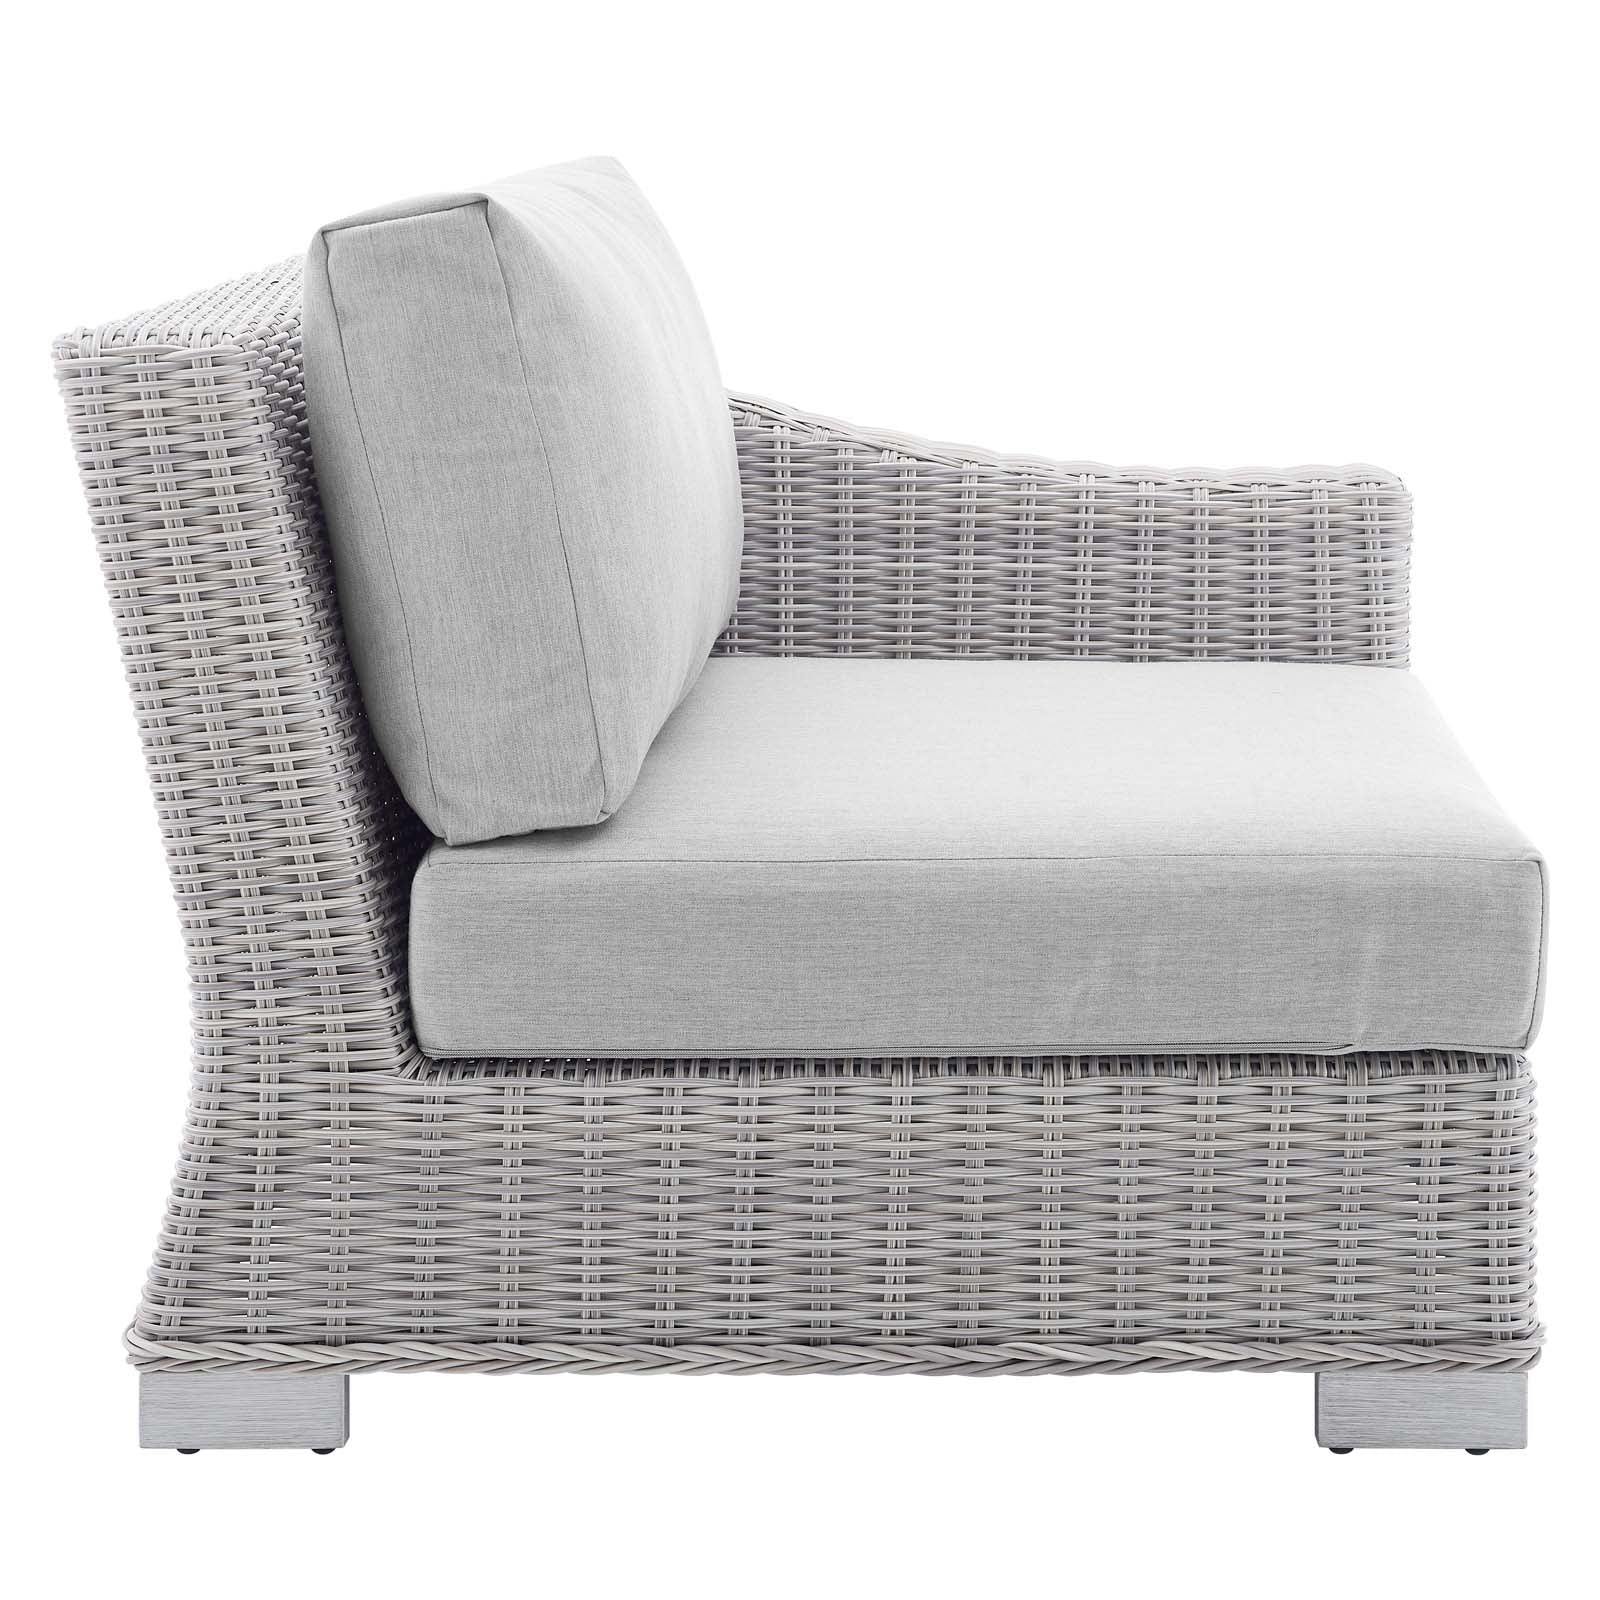 Conway Sunbrella® Outdoor Patio Wicker Rattan 7-Piece Sectional Sofa Set